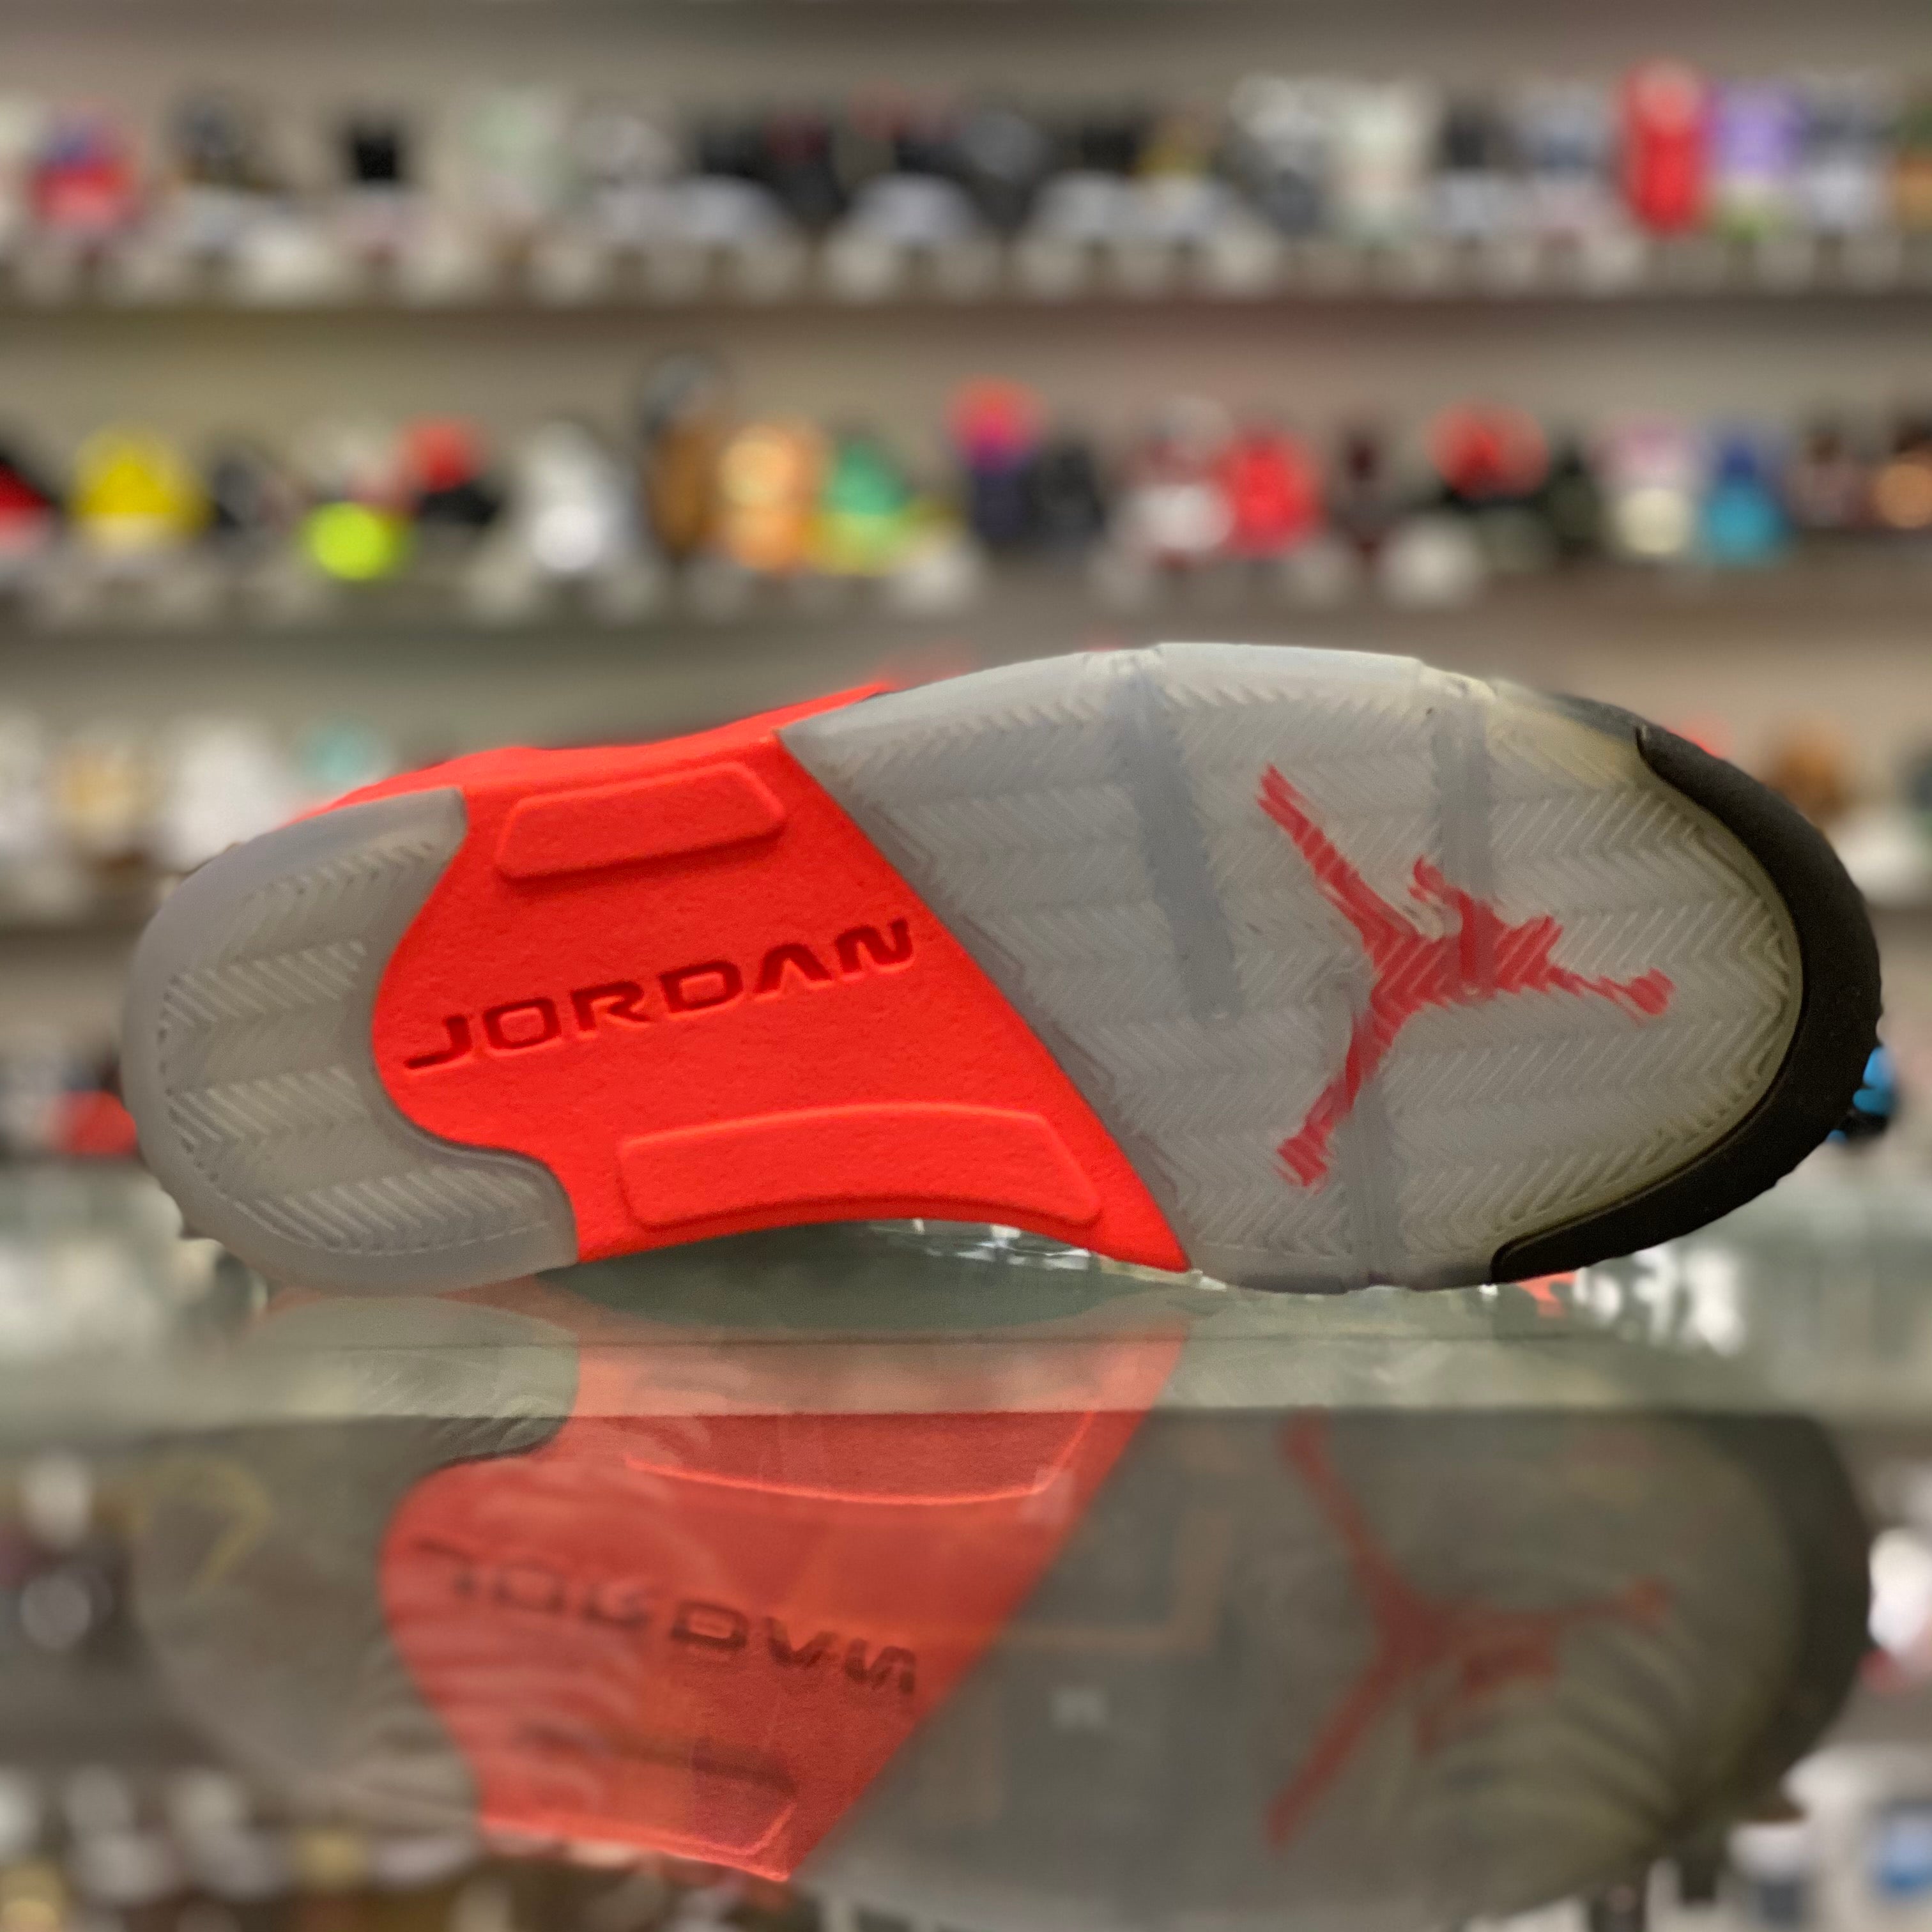 Air Jordan 5 Retro  “Infrared 3Lab5”